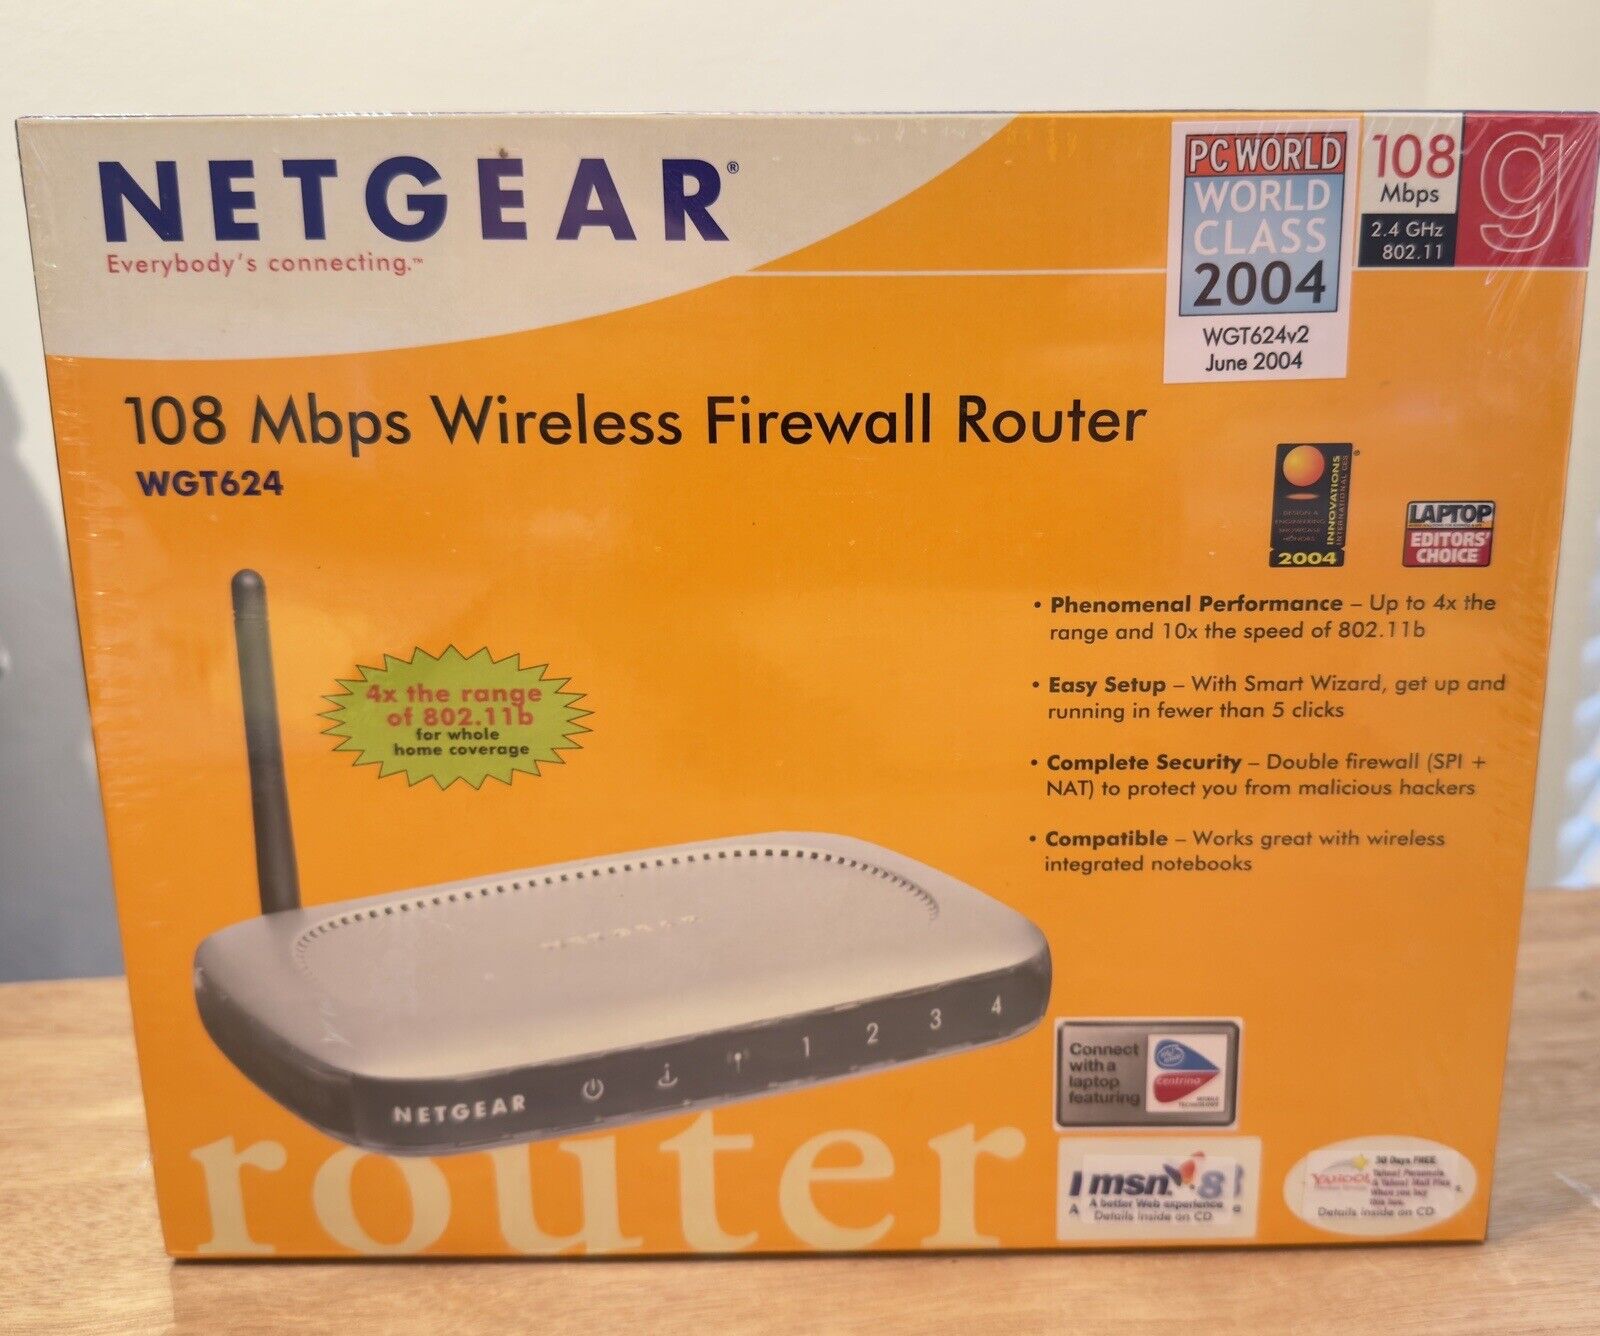 Netgear 108 Mbps Wireless Firewall Router WGT624 Has 4-Ports